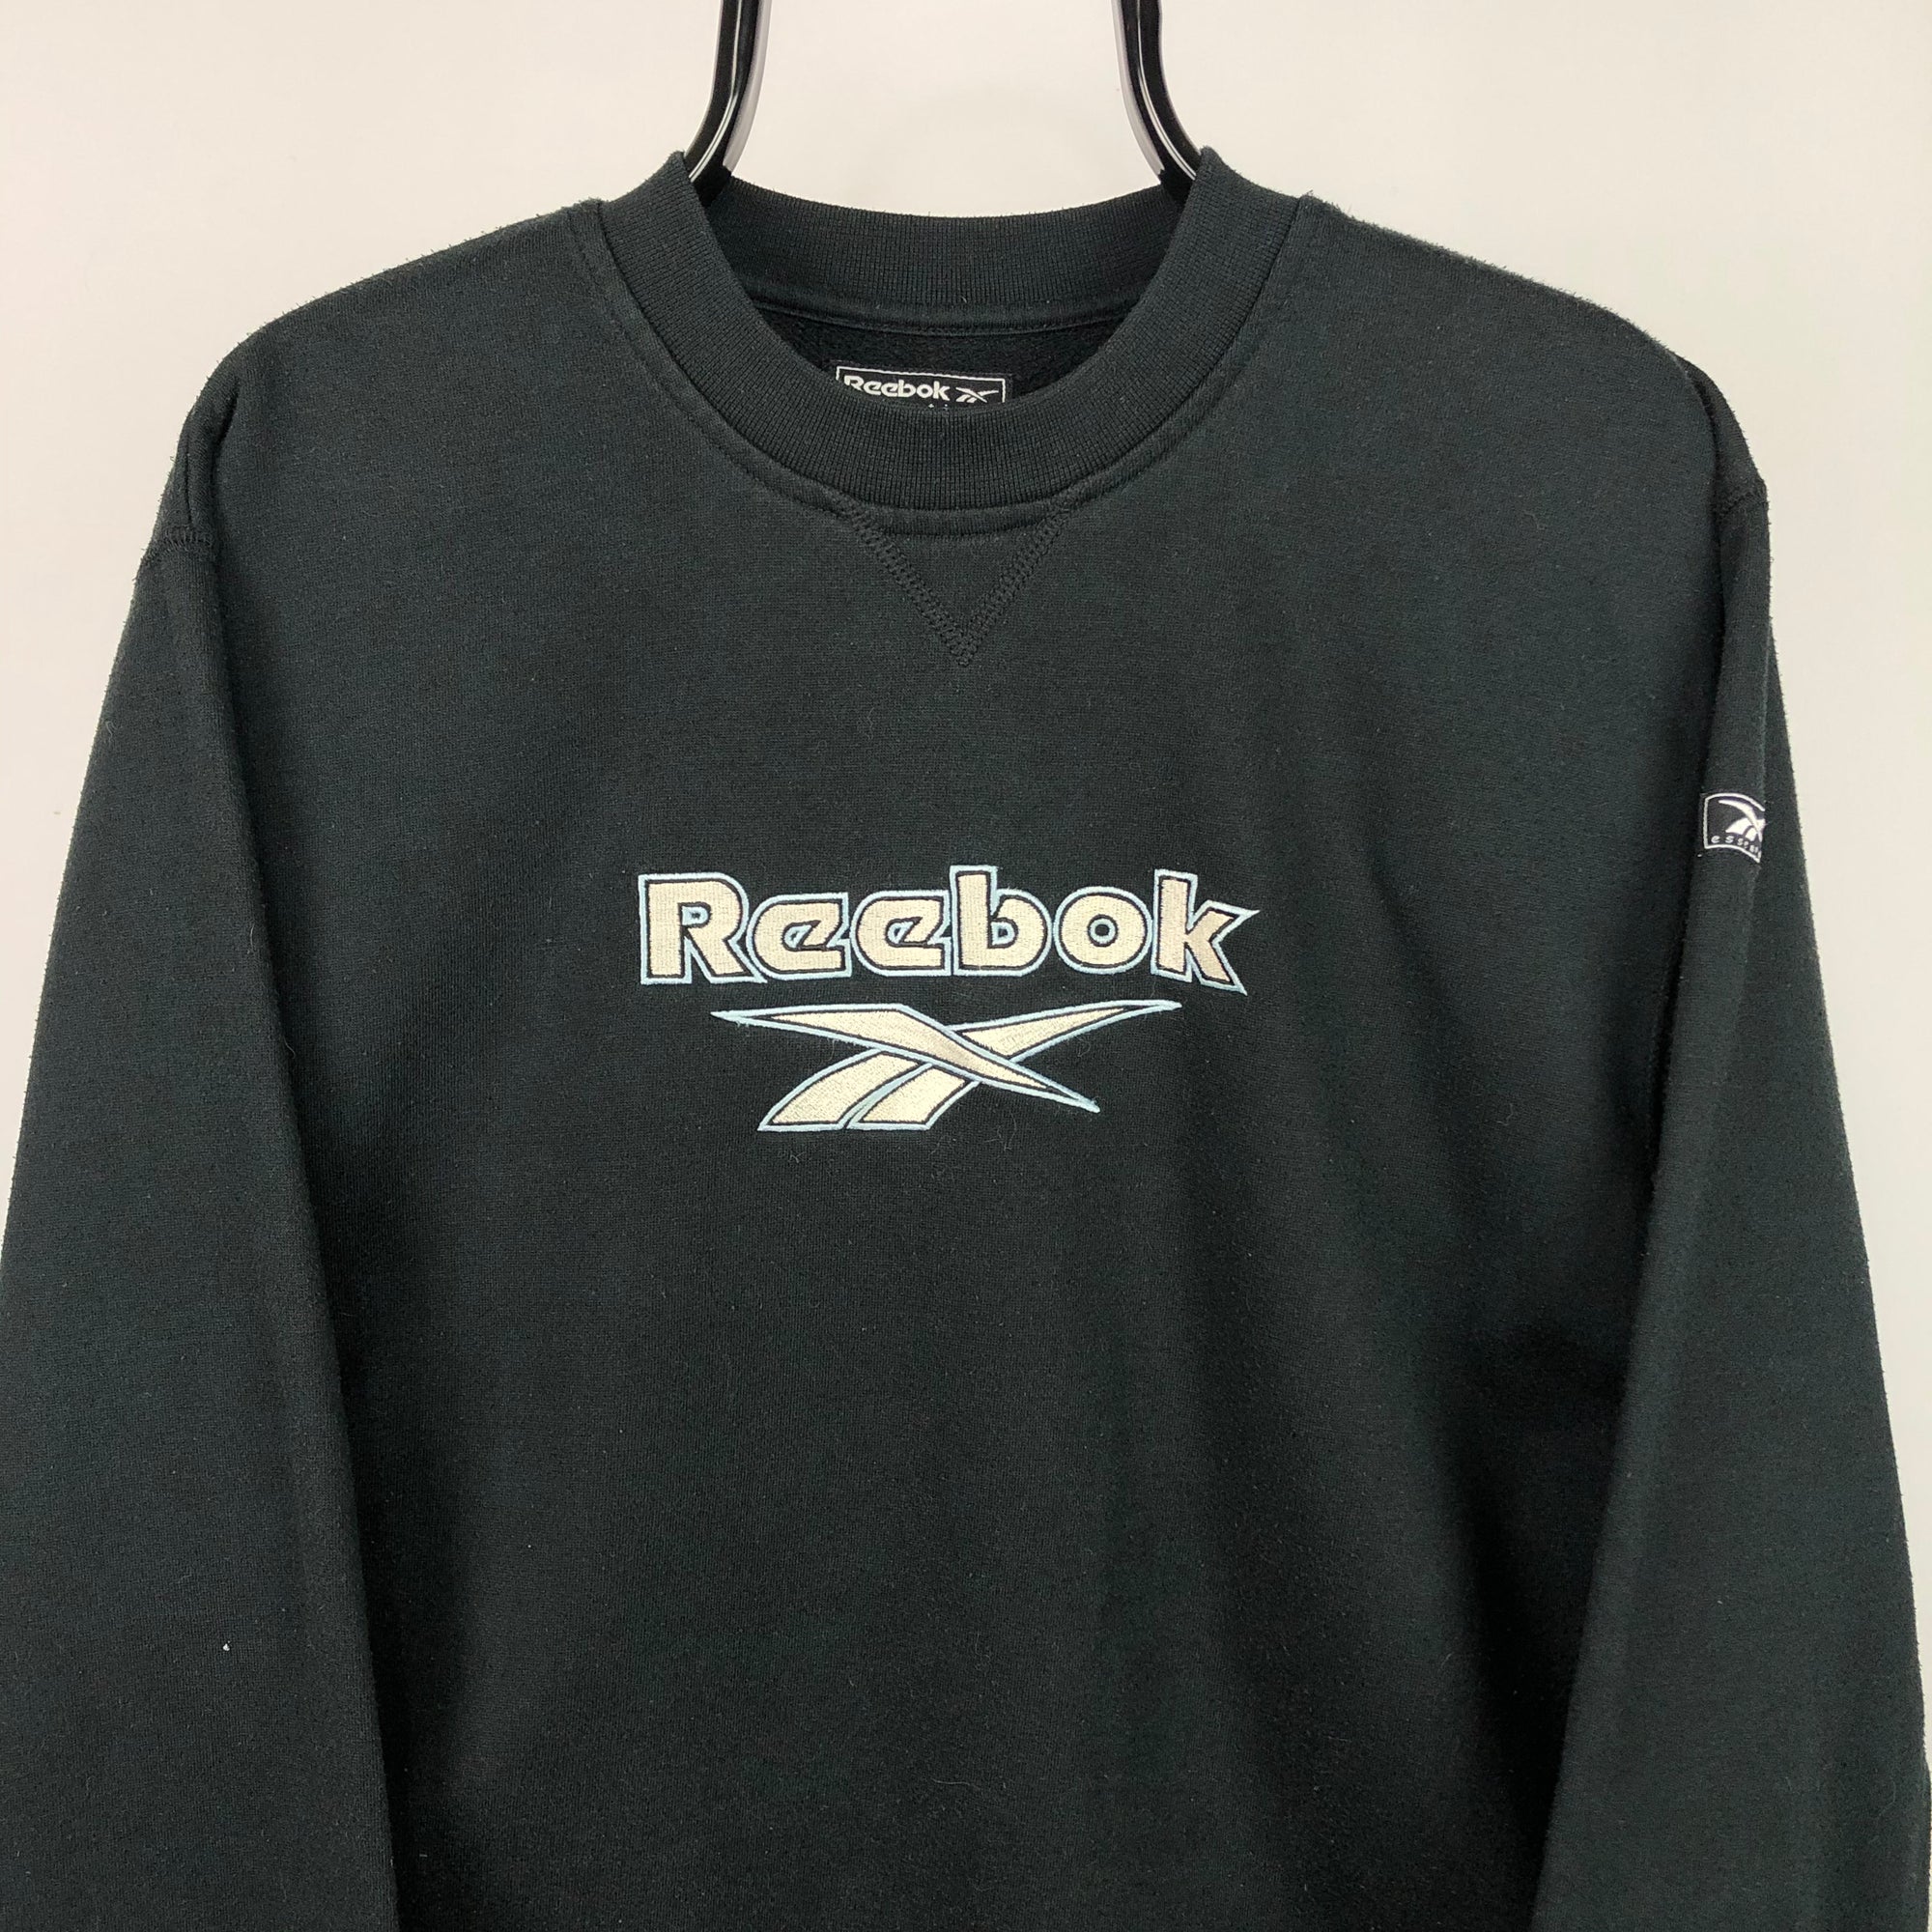 Vintage 90s Reebok Spellout Sweatshirt in Black/Blue - Men's Small/Women's Medium